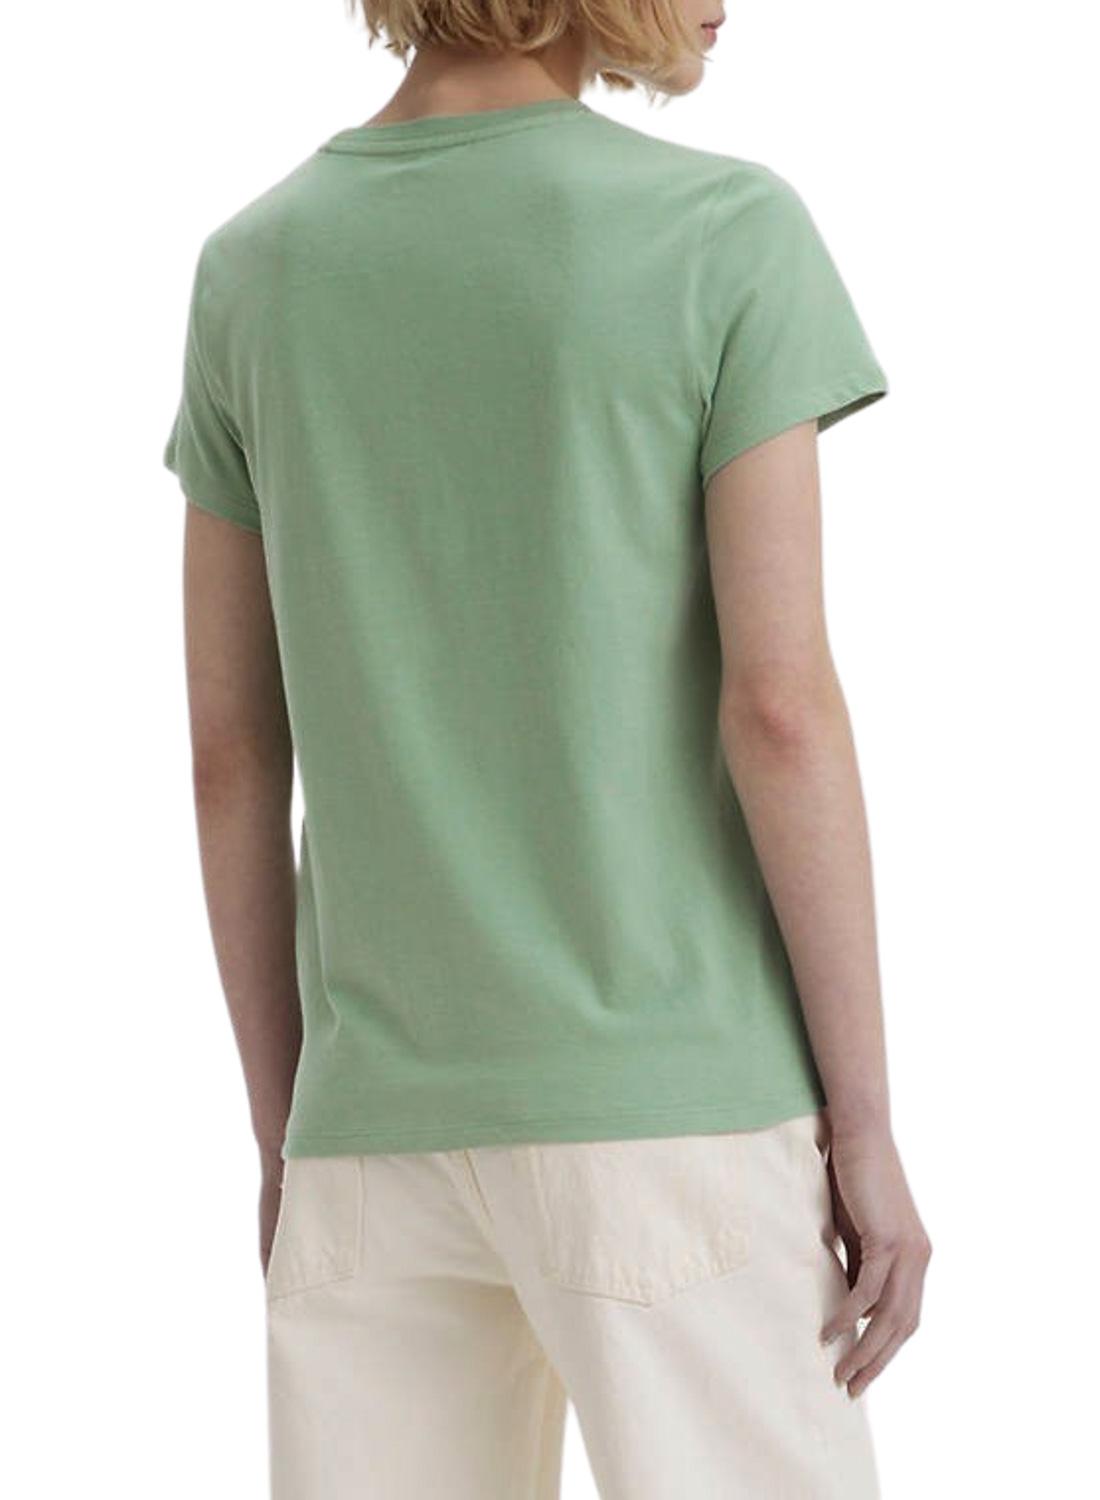 T-Shirt Levis Water Verde per Donna